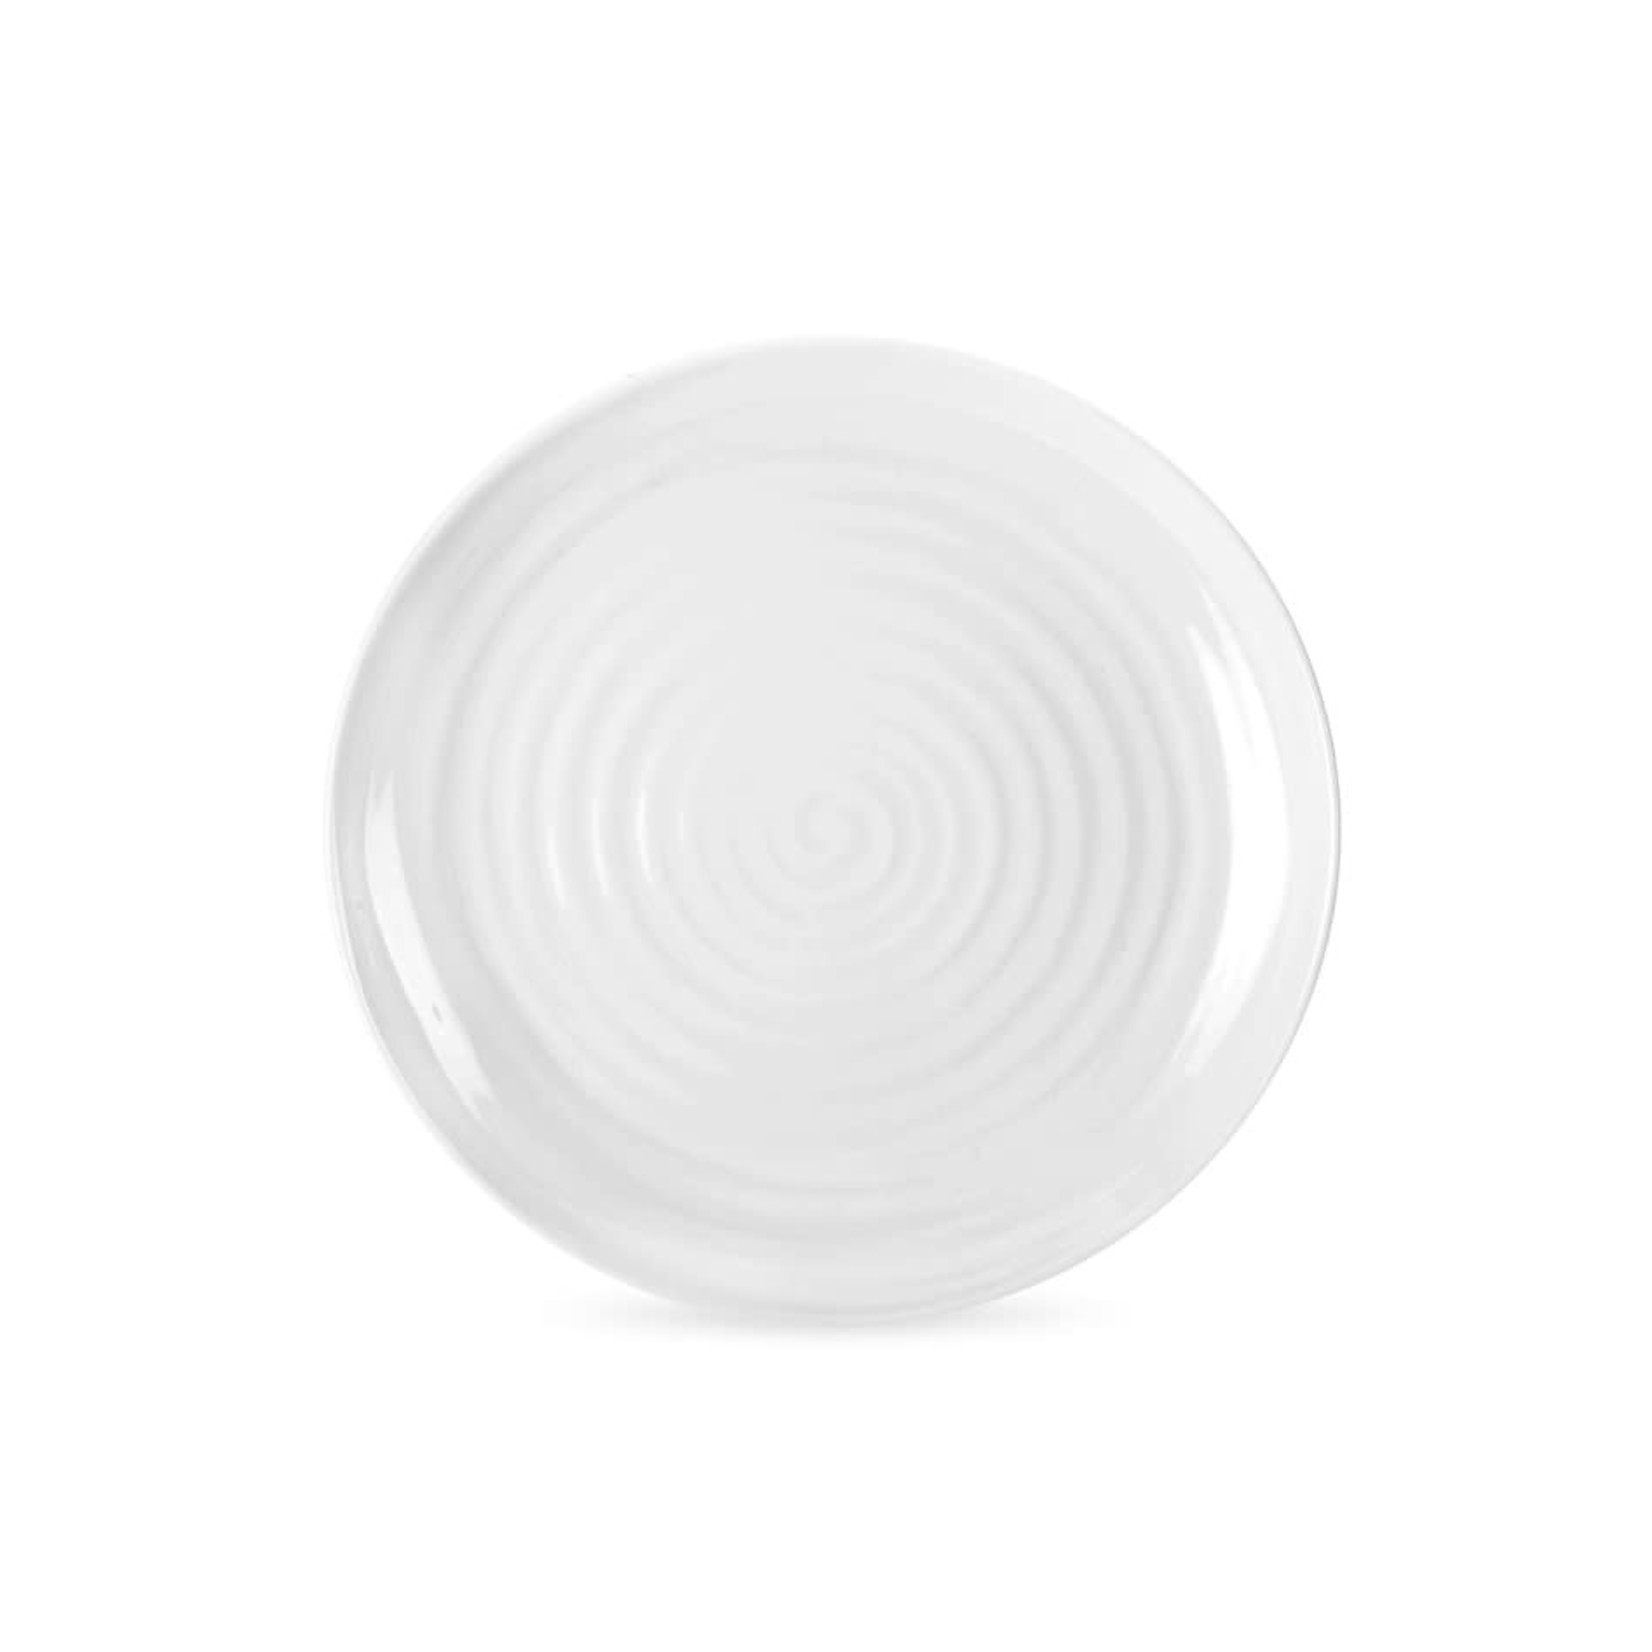 SOPHIE CONRAN SOPHIE CONRAN Round Coupe Salad Plate 8.5" - White